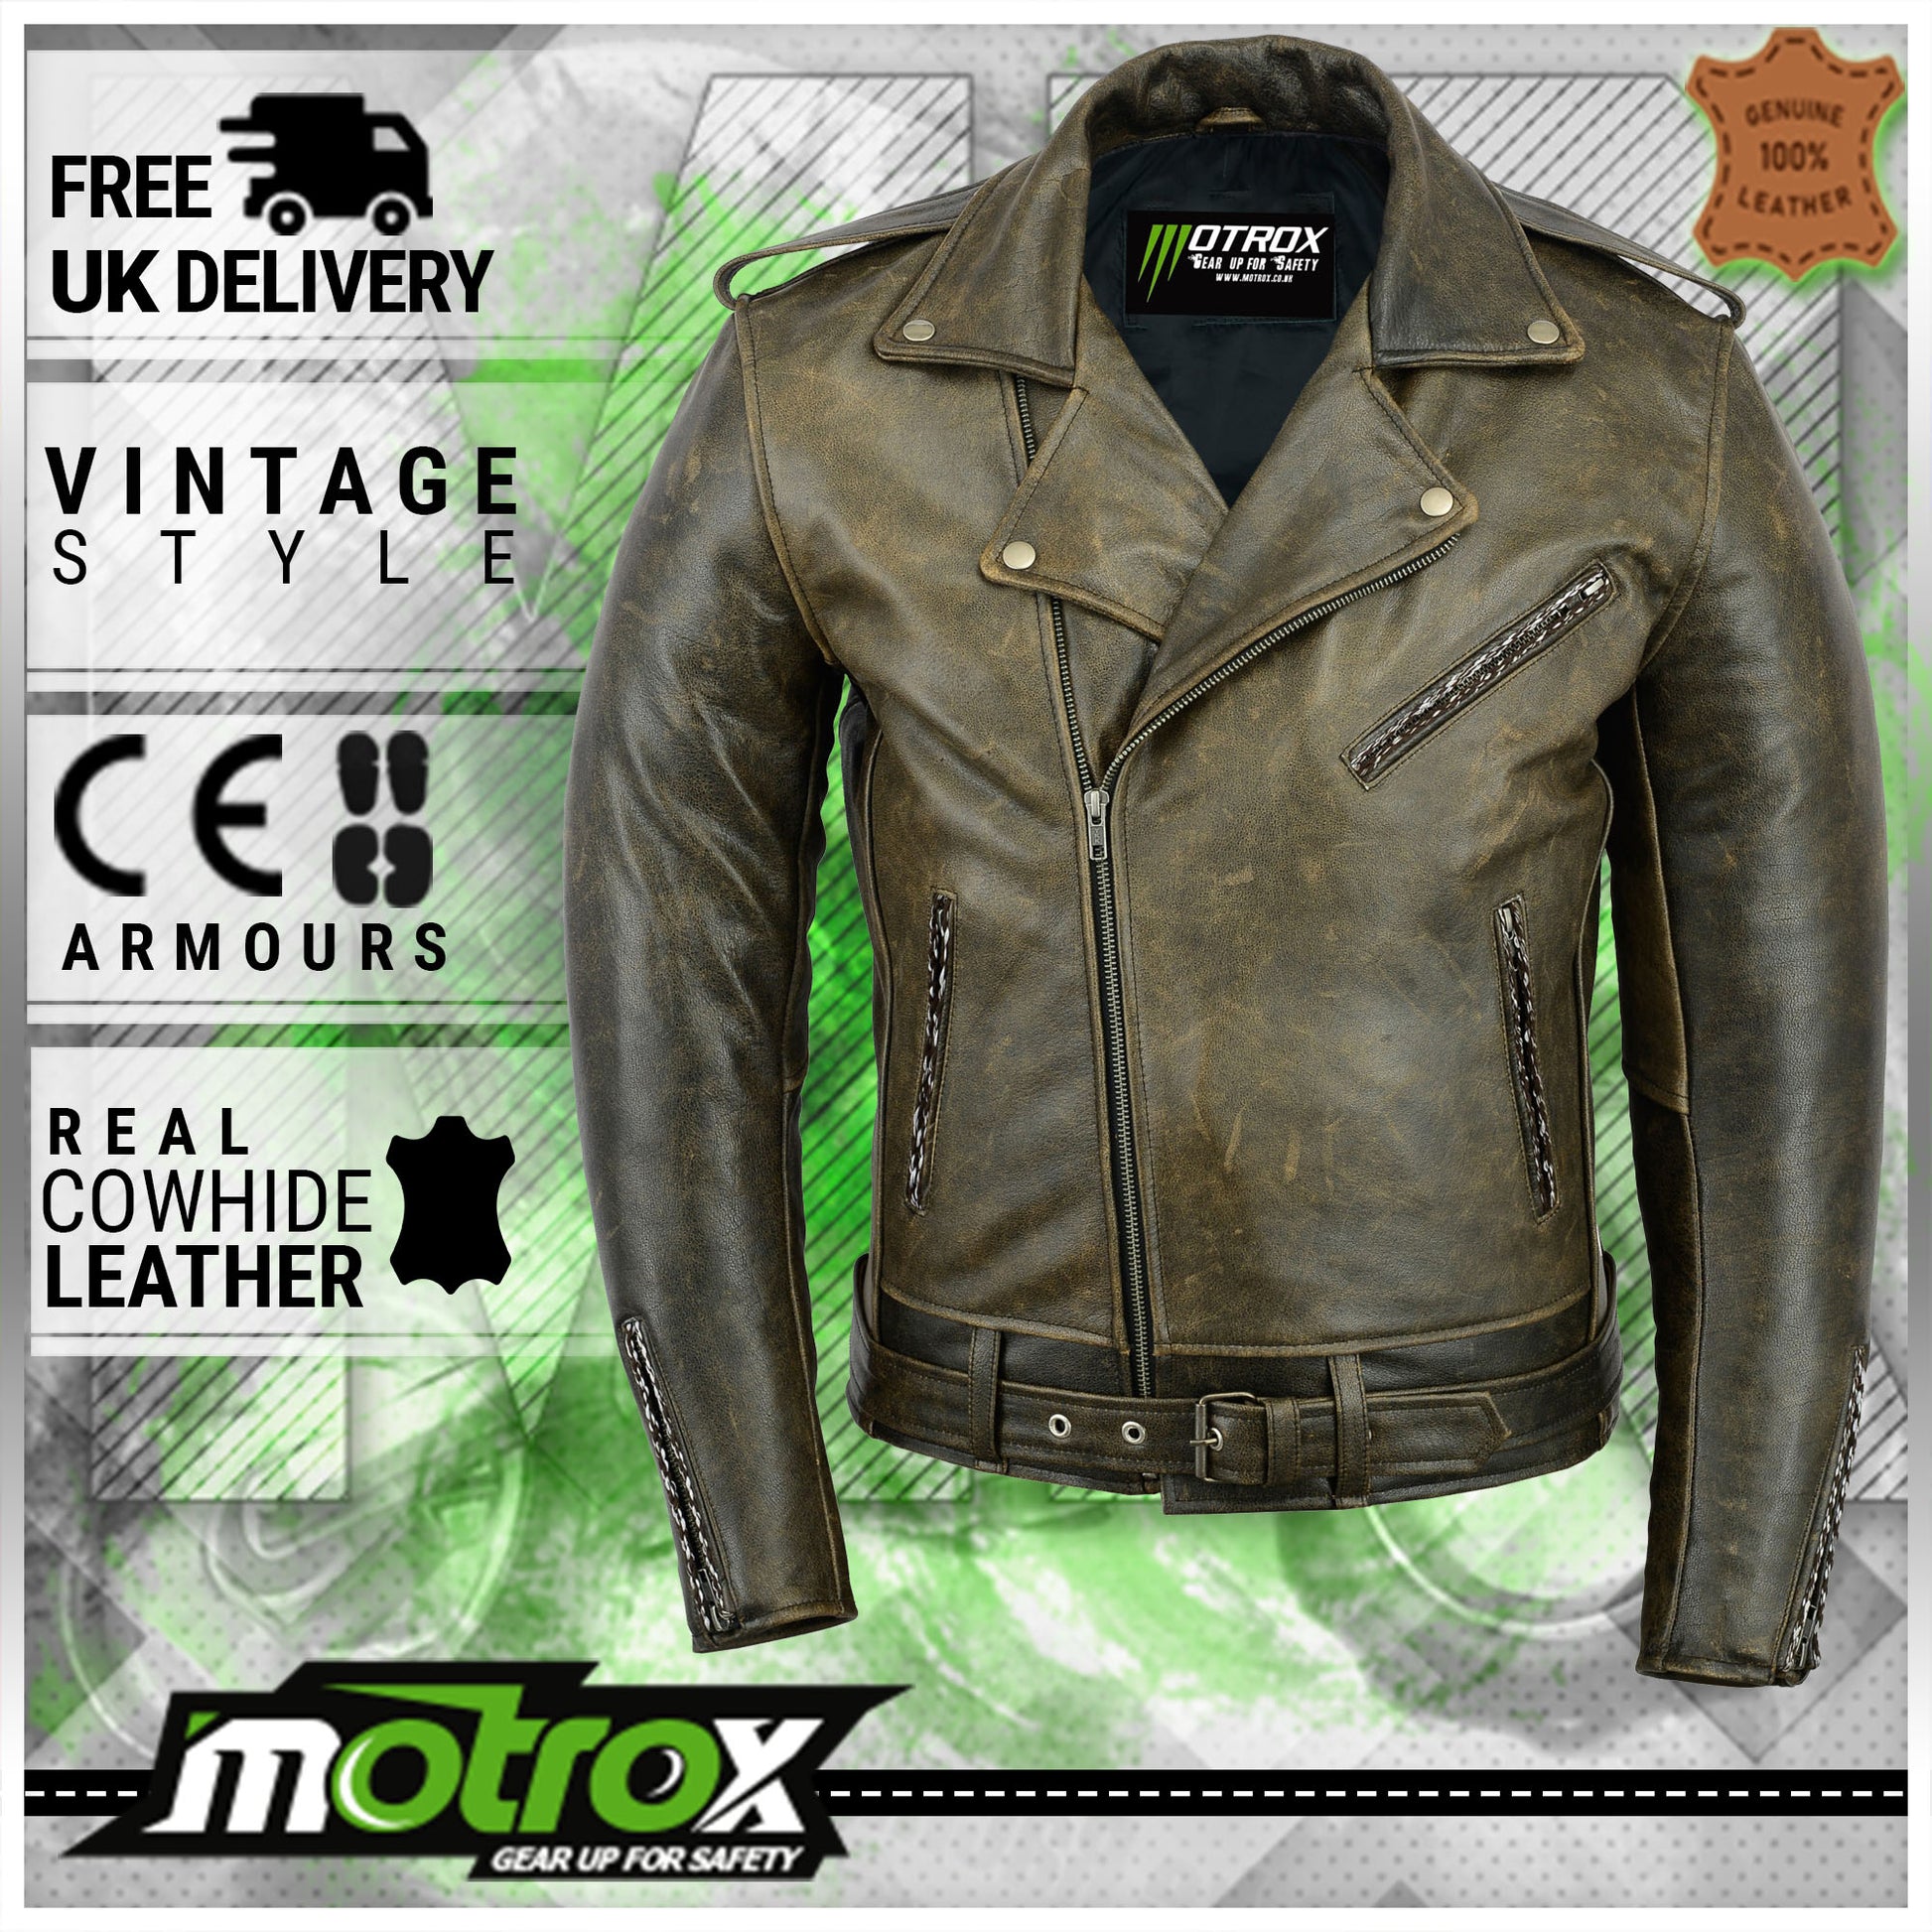 brando leather jacket